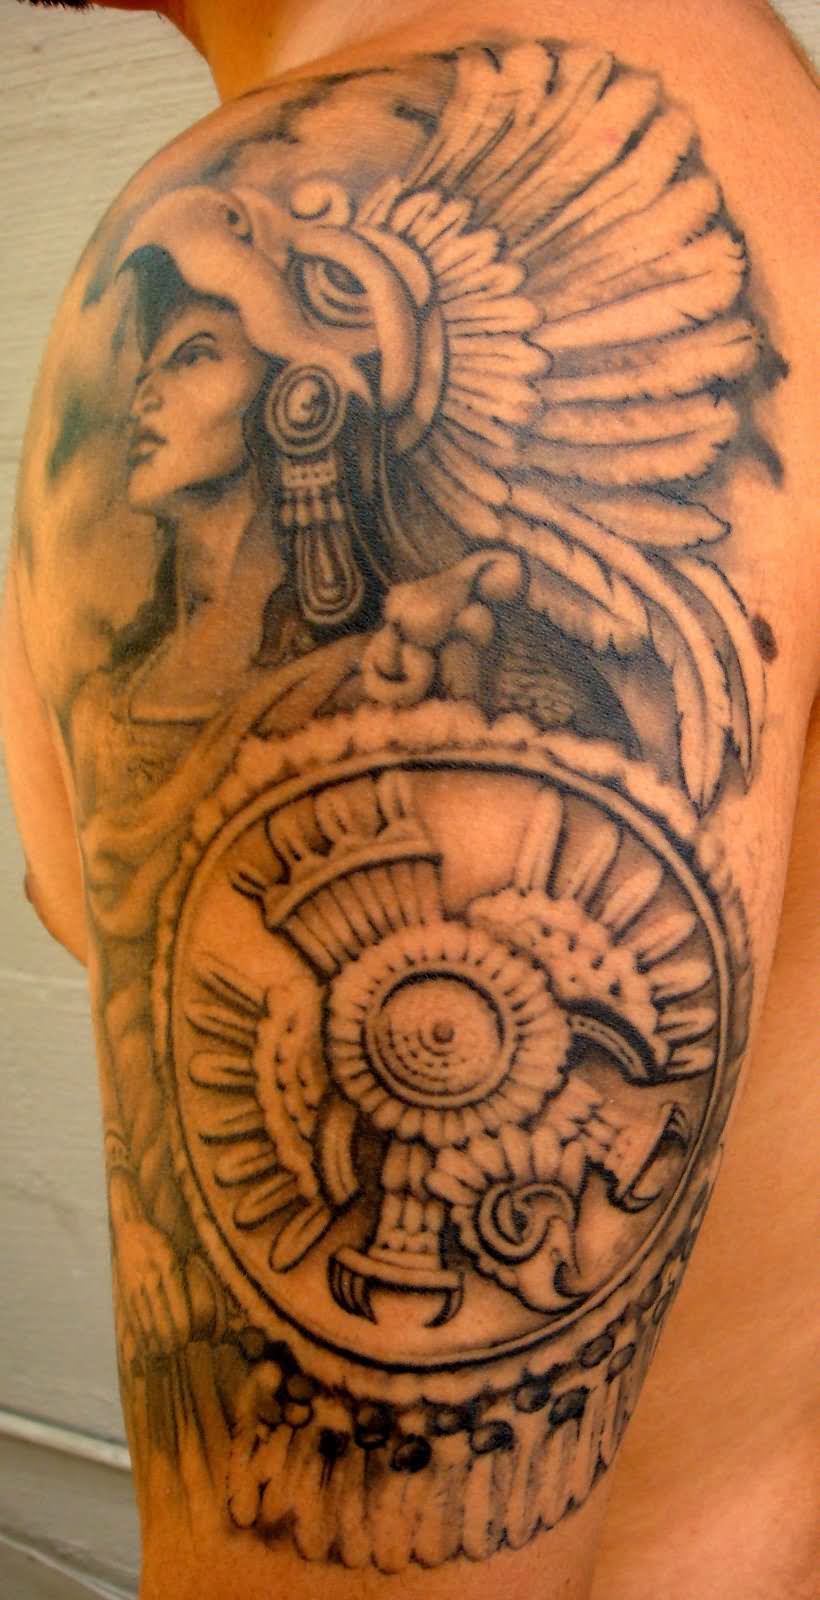 Aztec Warrior Tattoo Designs for Men